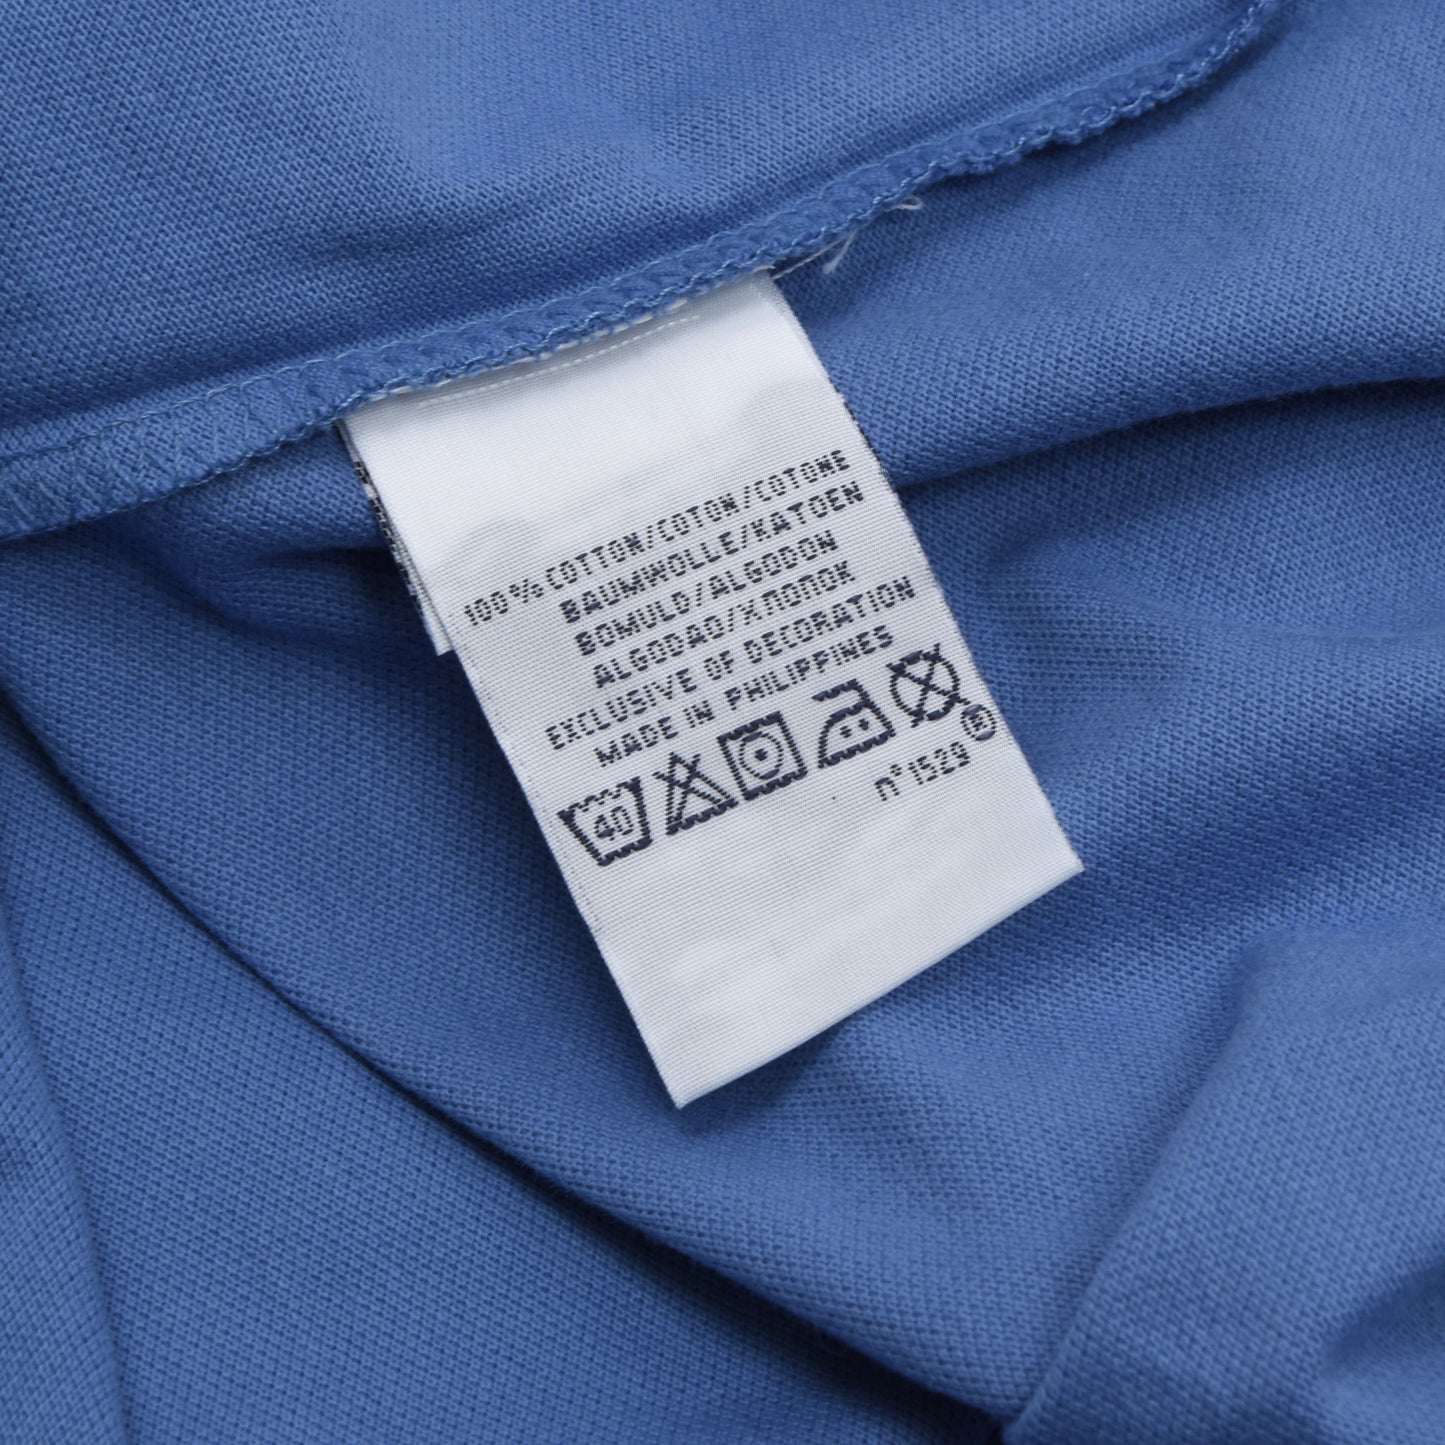 x2 Polo Ralph Lauren Poloshirts Größe XXL Custom Fit/Slim Fit - Blau &amp; Grün